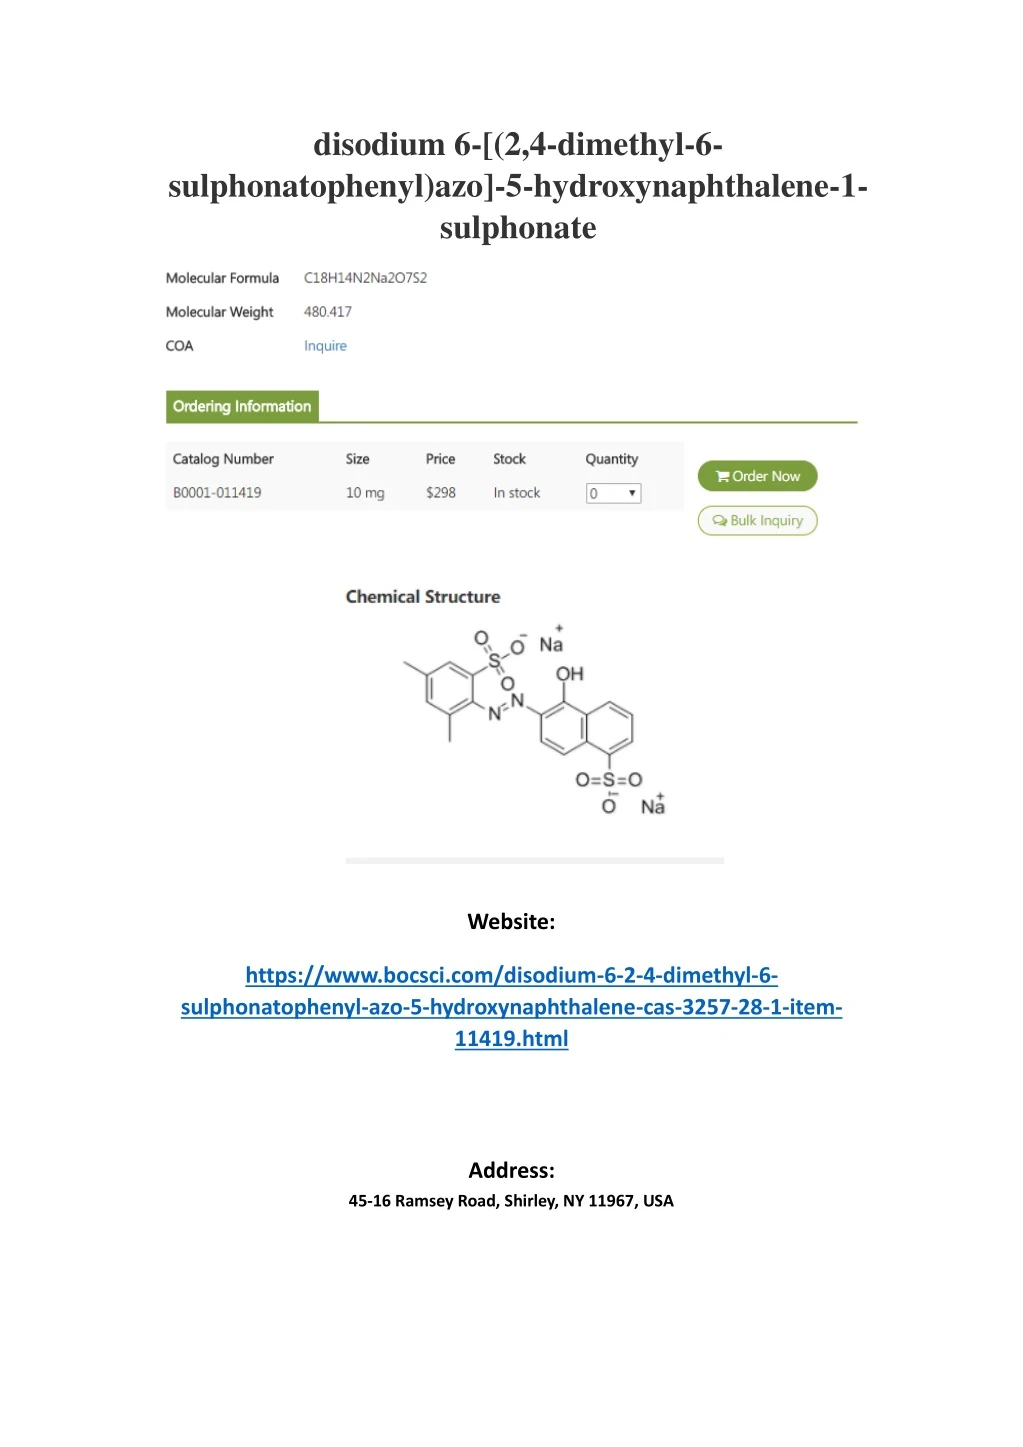 disodium 6 2 4 dimethyl 6 sulphonatophenyl